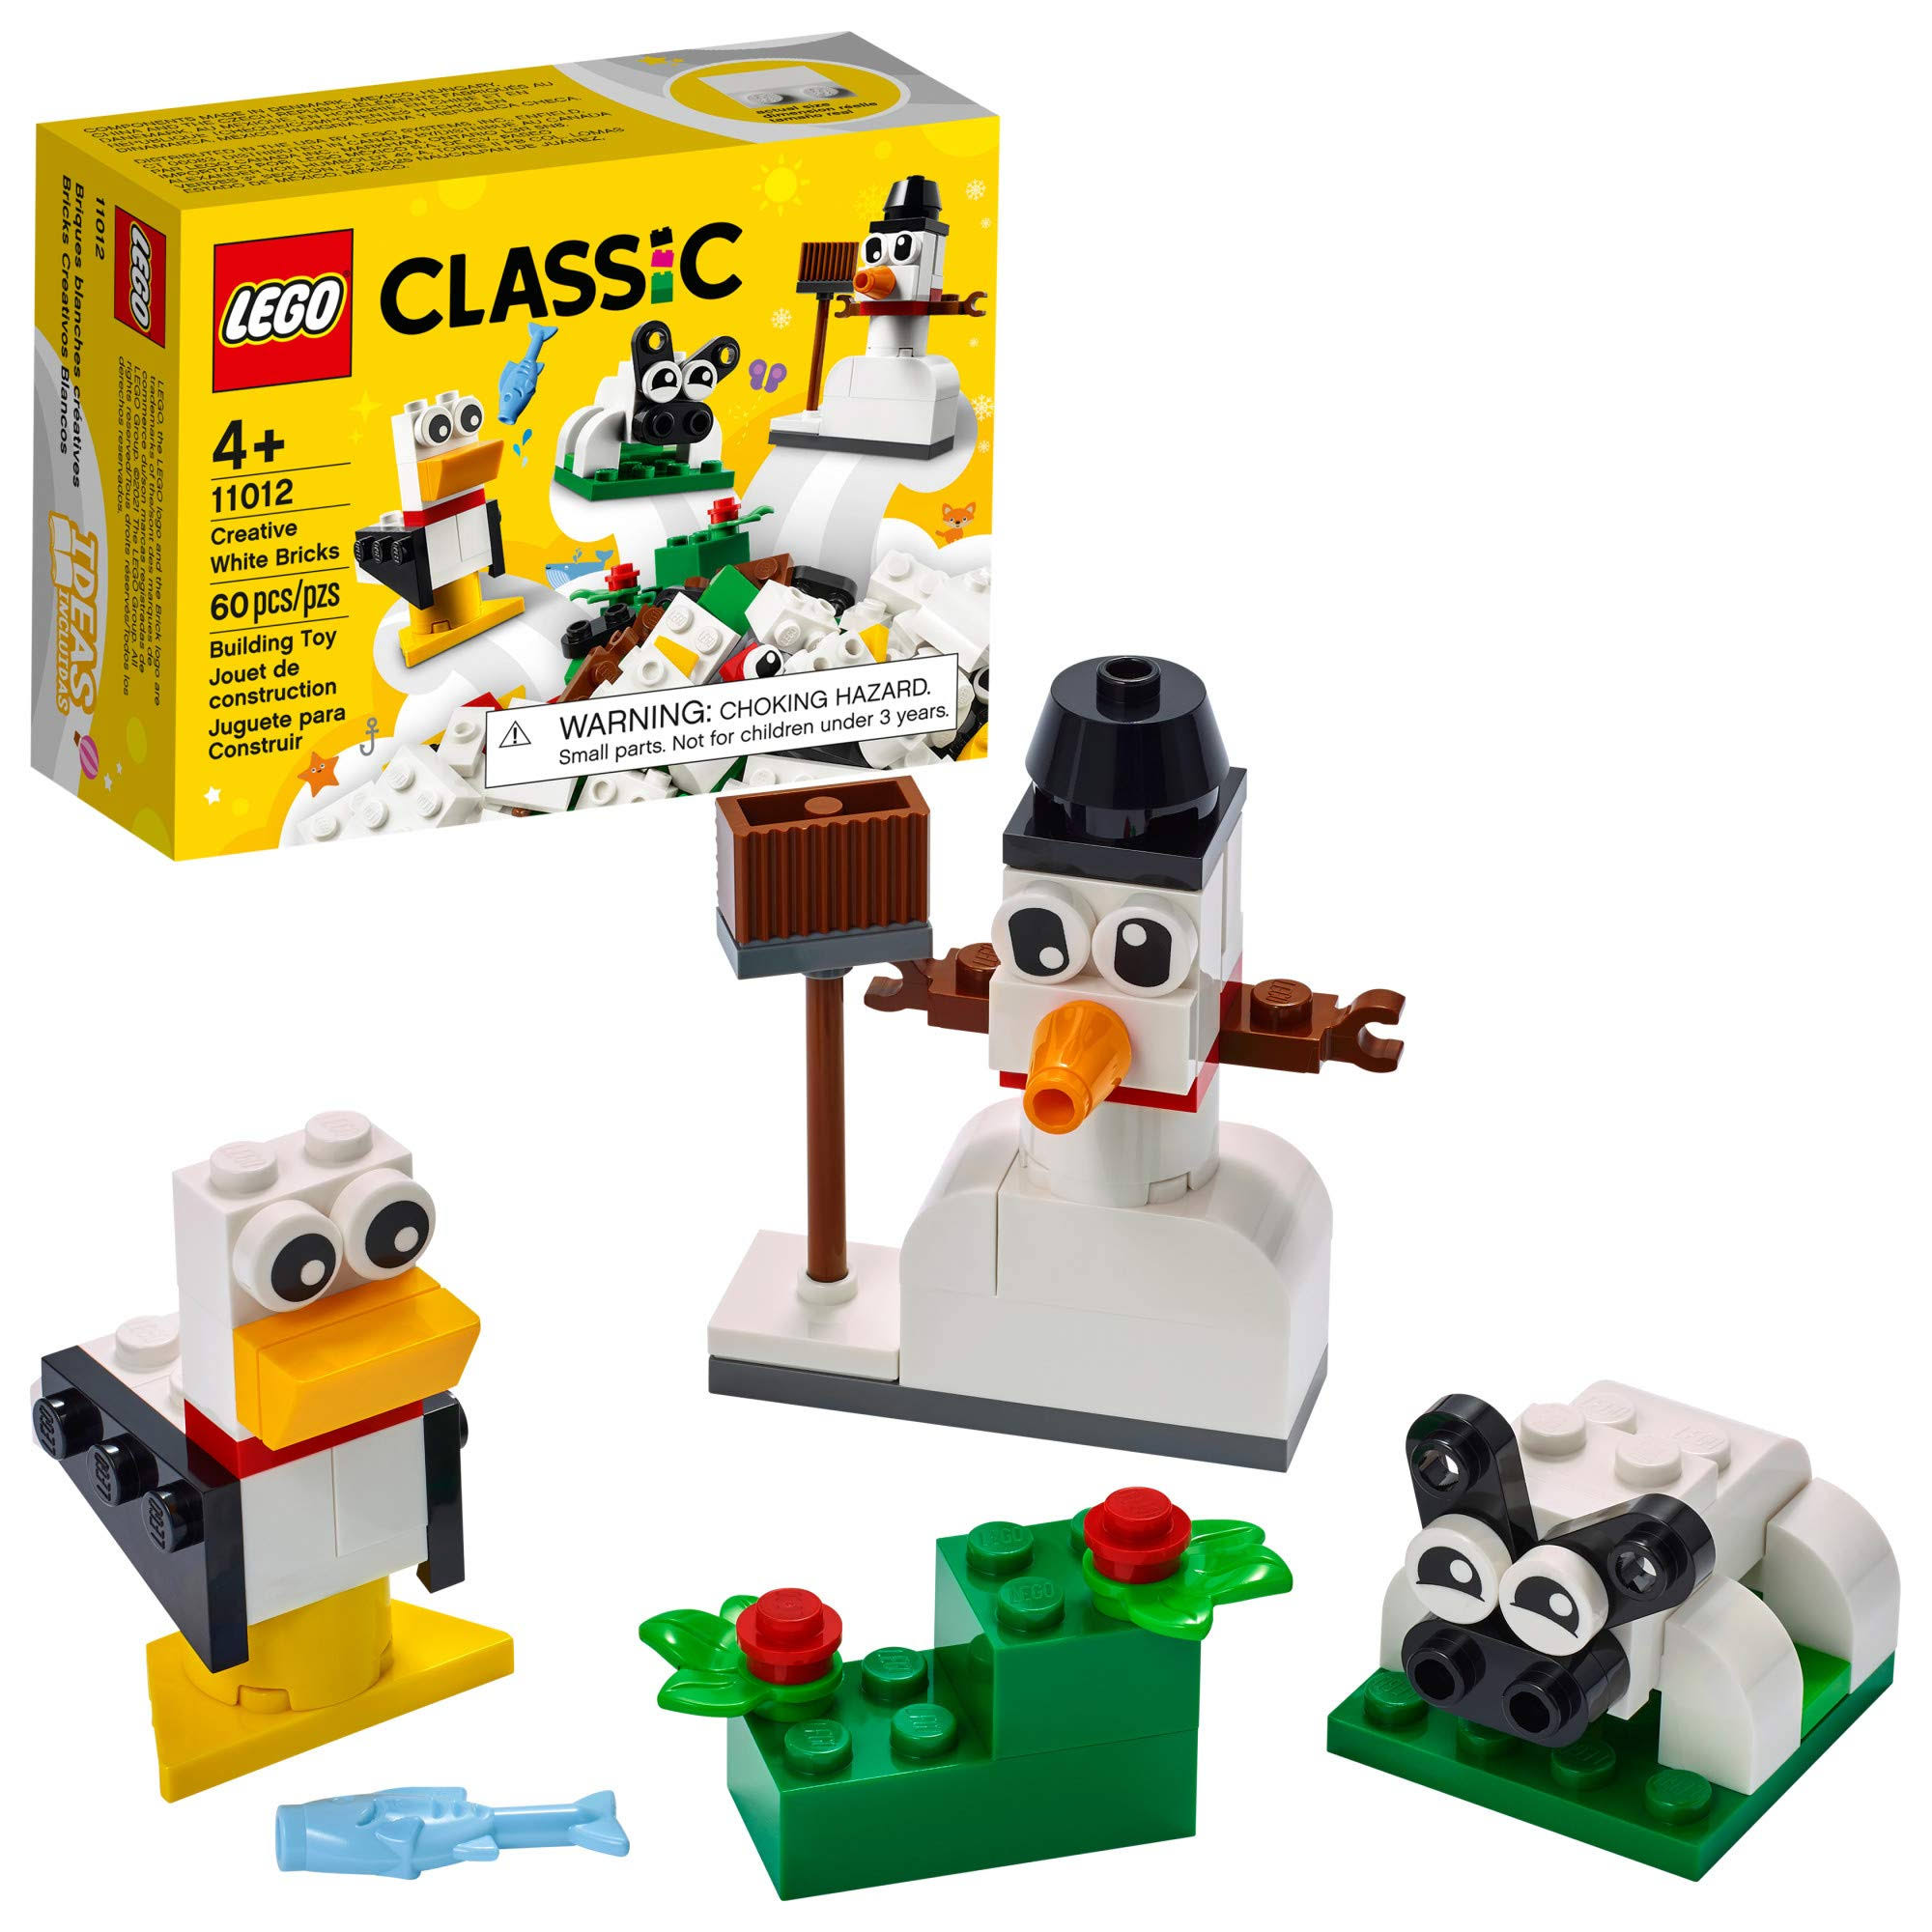 LEGO 11012 Creative White Bricks